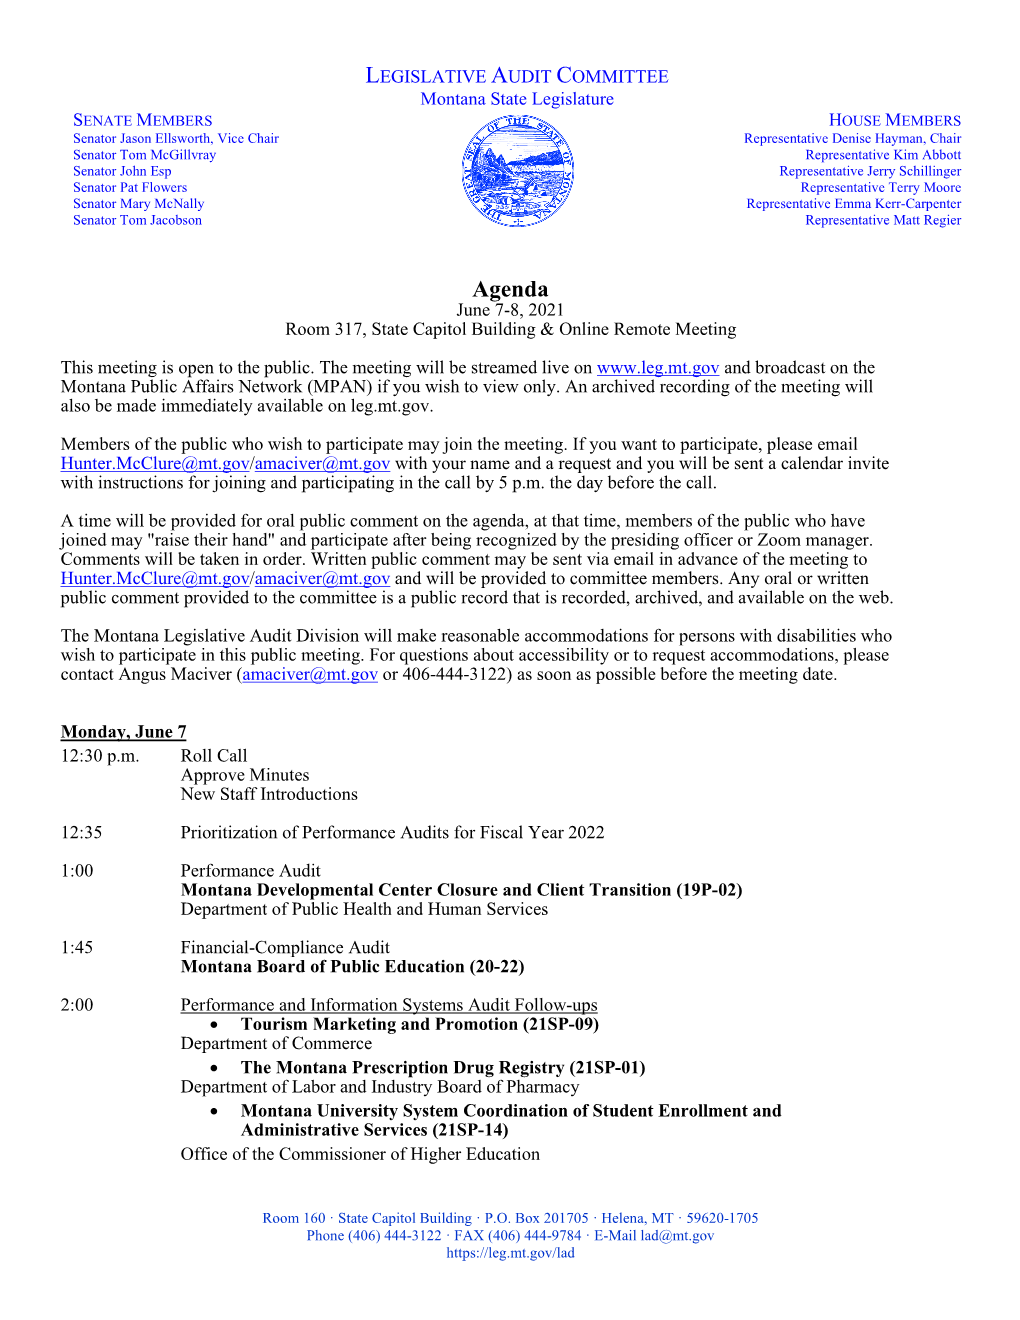 Agenda June 7-8, 2021 Room 317, State Capitol Building & Online Remote Meeting